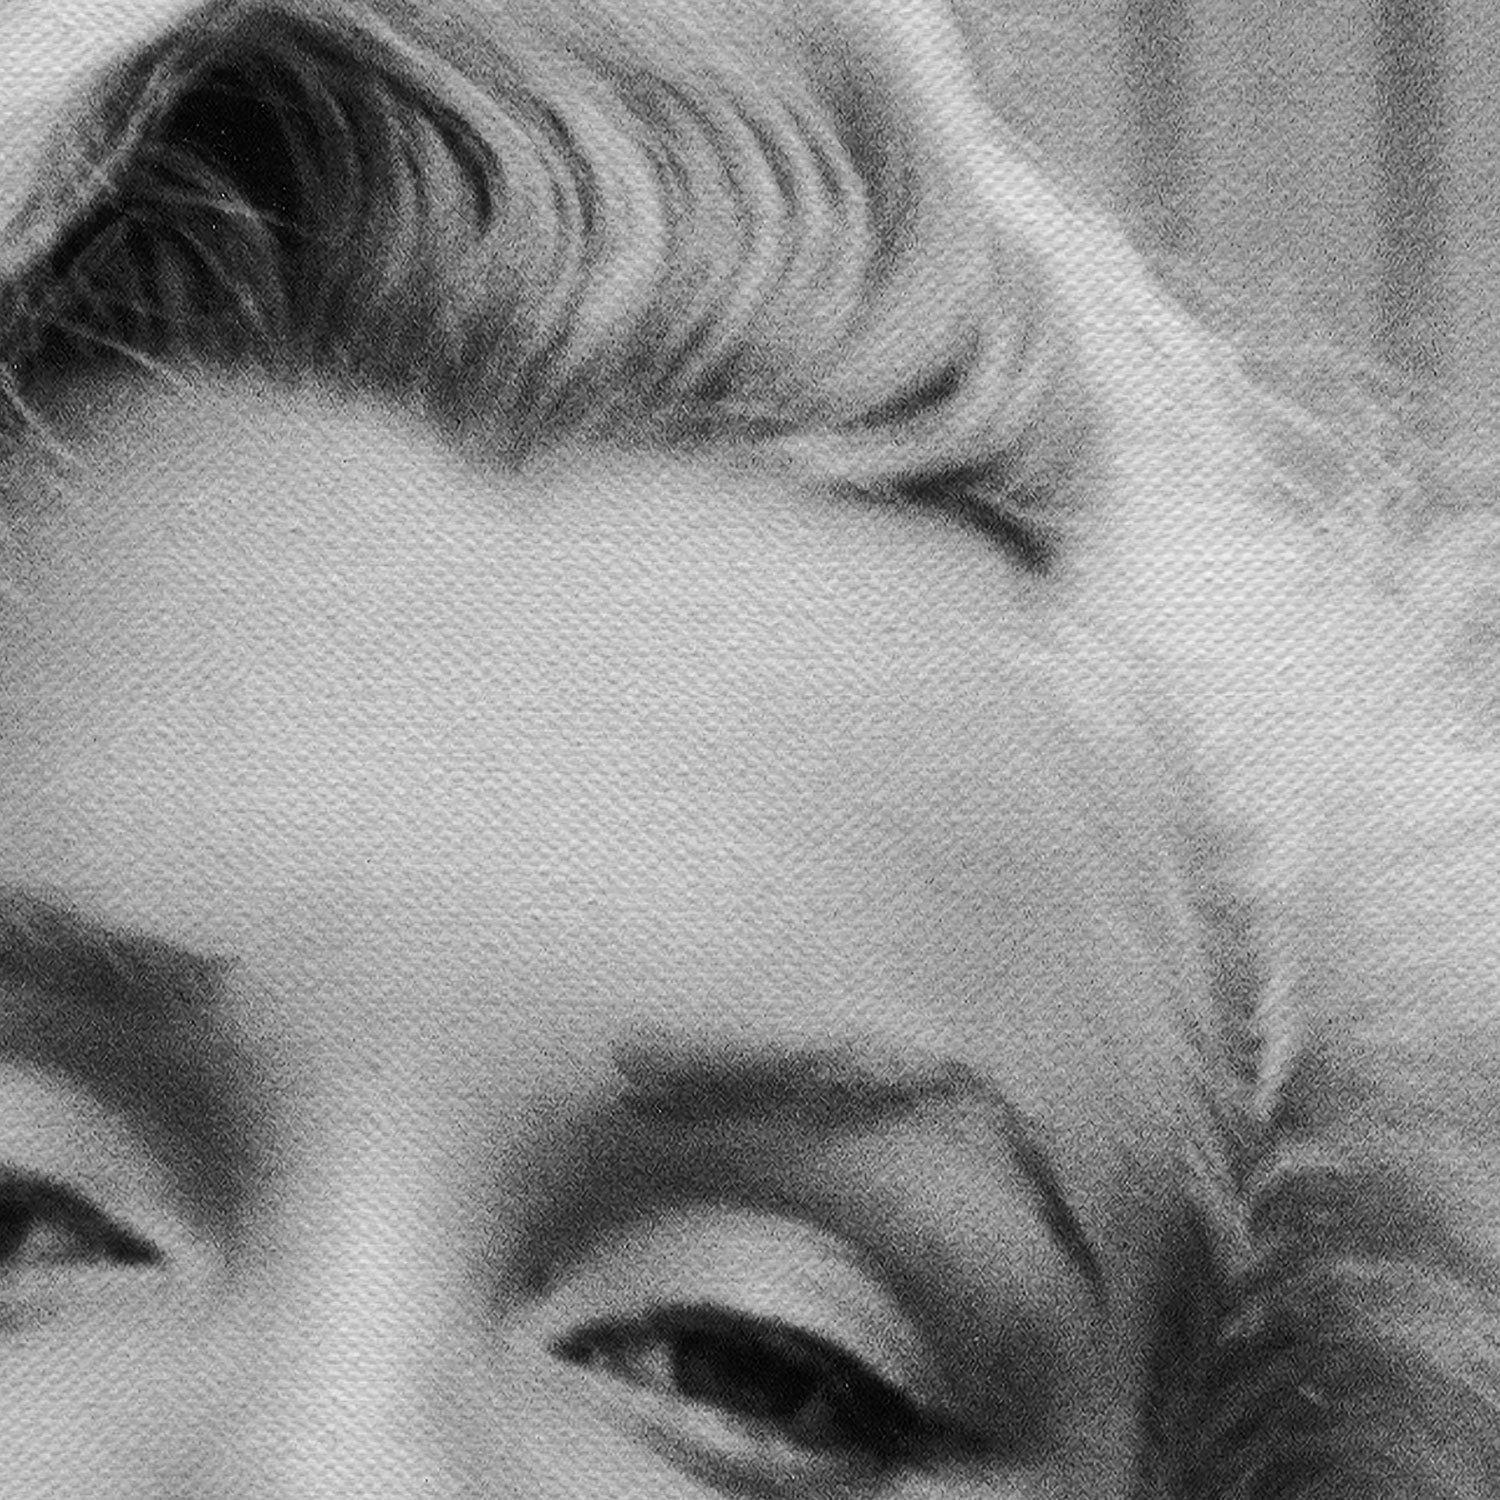 Marilyn Monroe Vintage Photo Wall Art Canvas